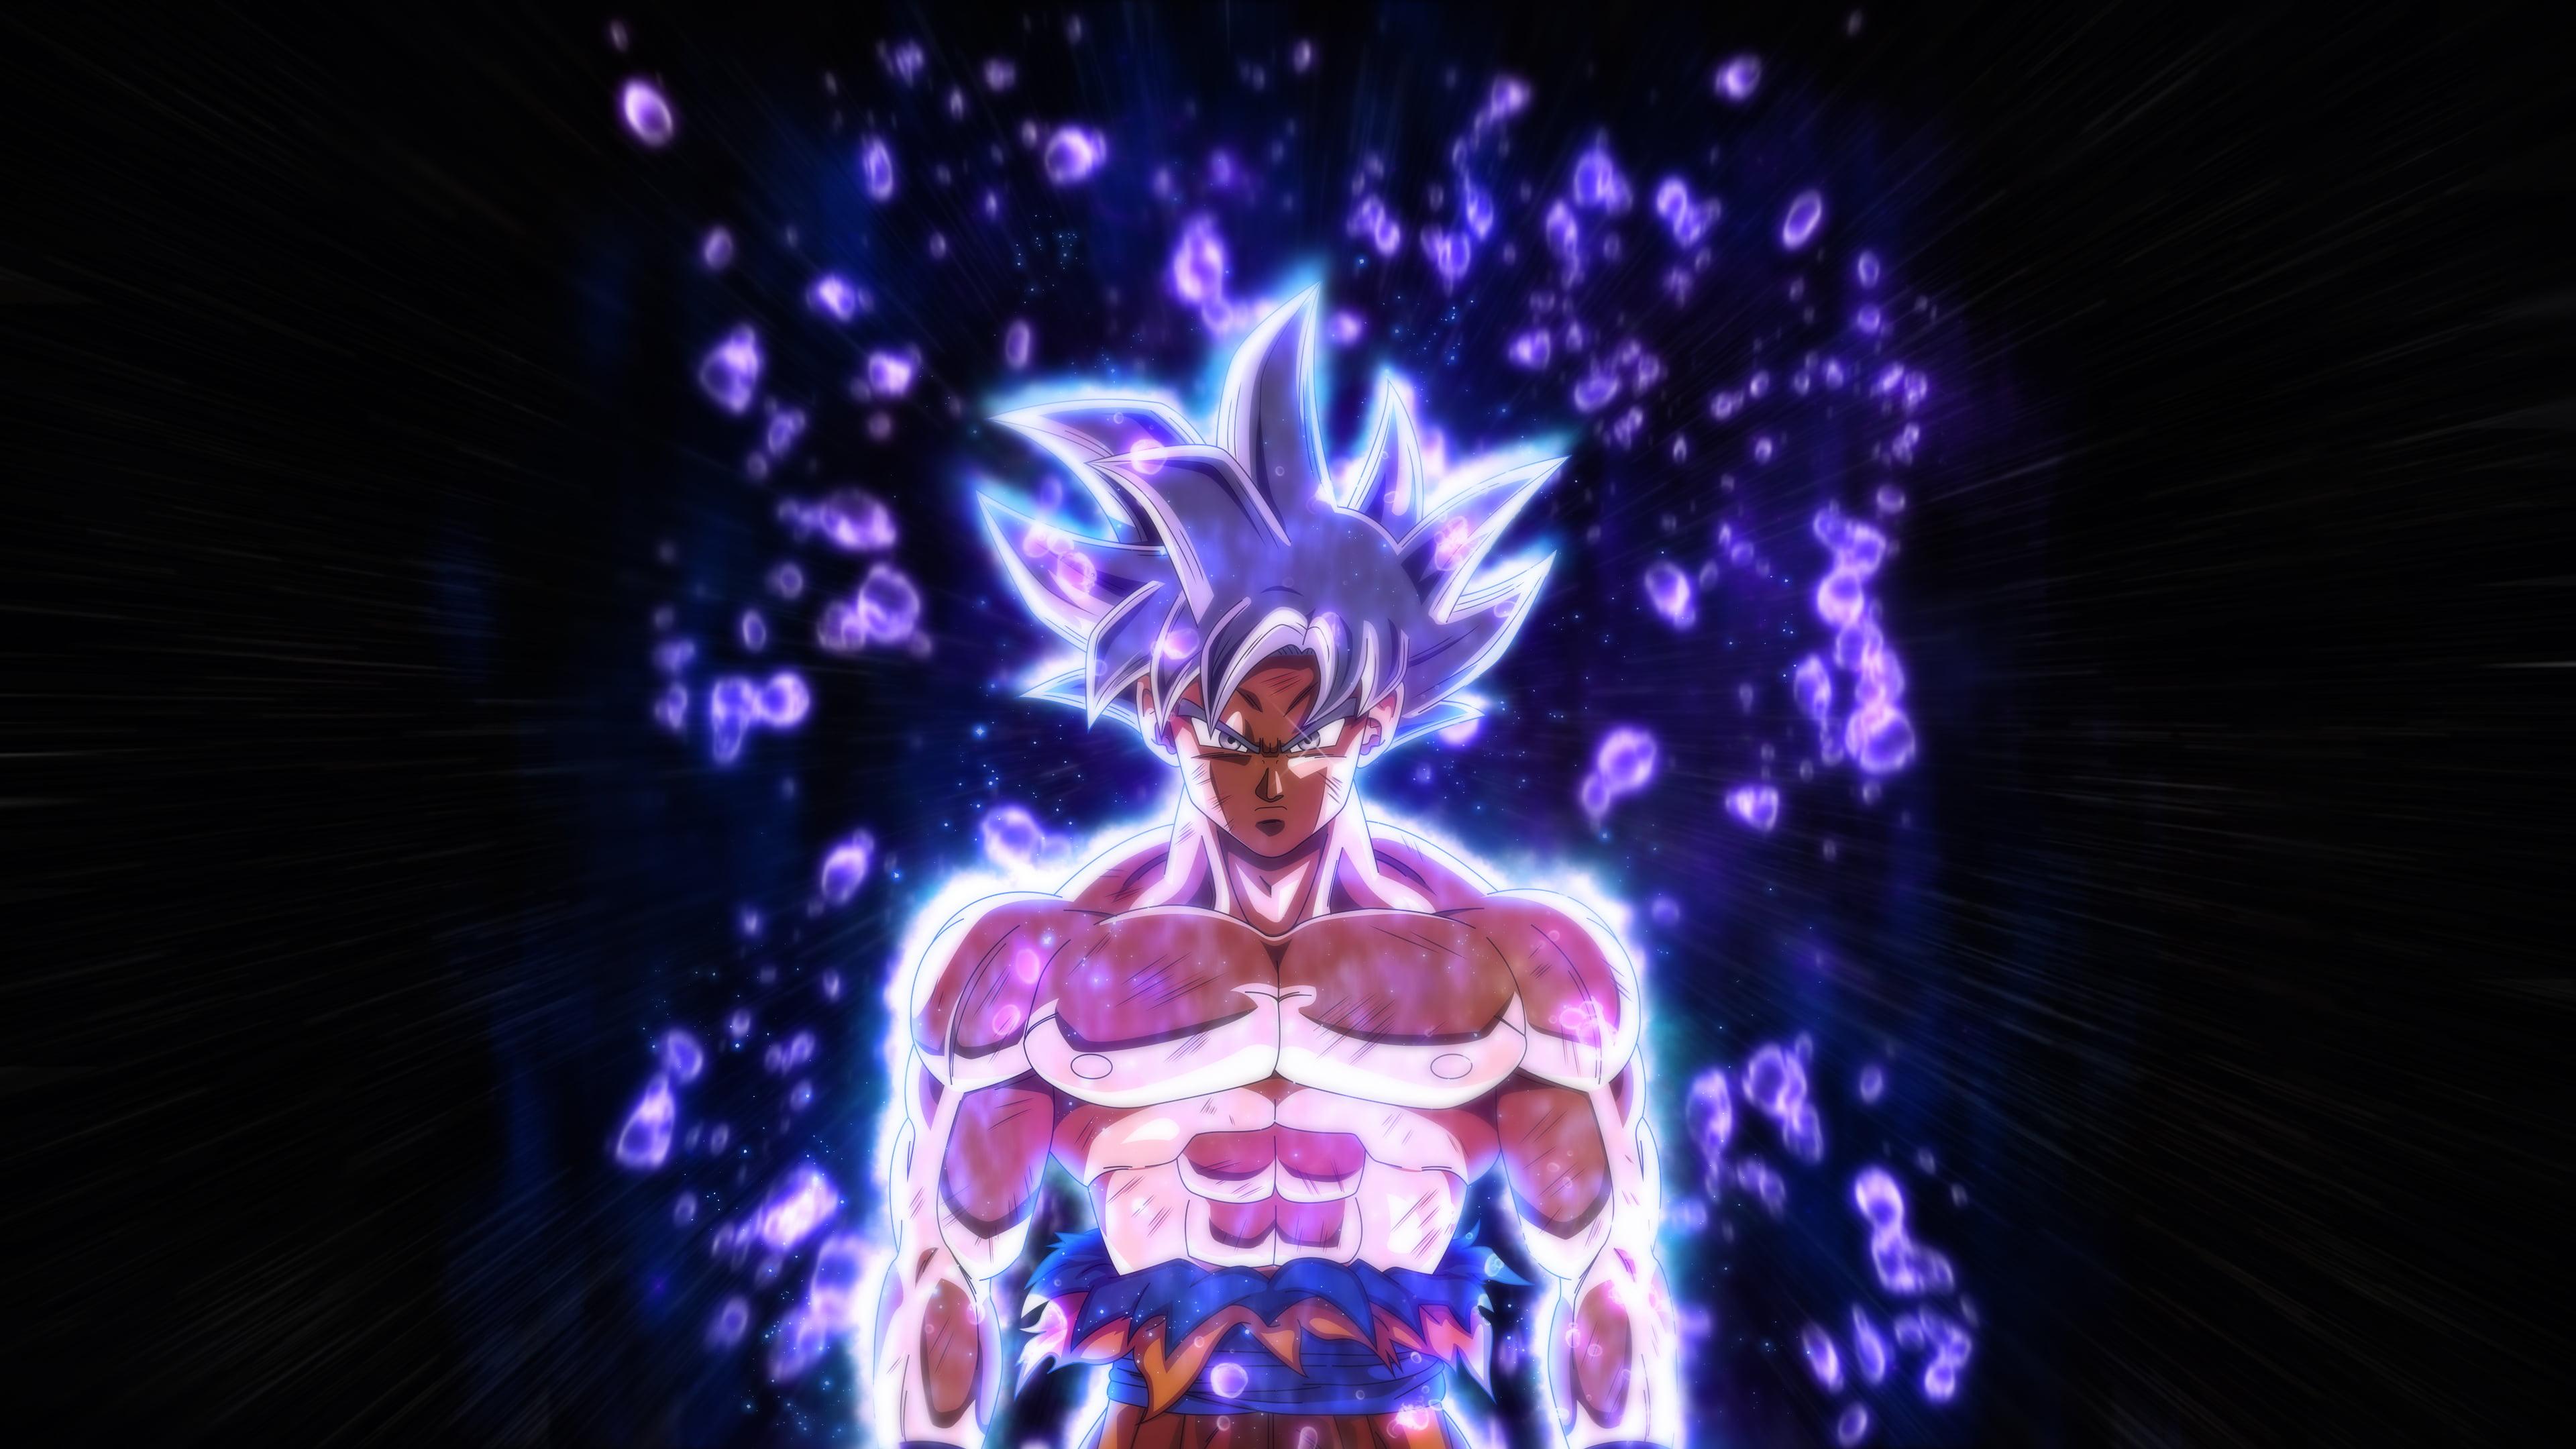 HD wallpaper: San Goku digital wallpaper, Dragon Ball Super